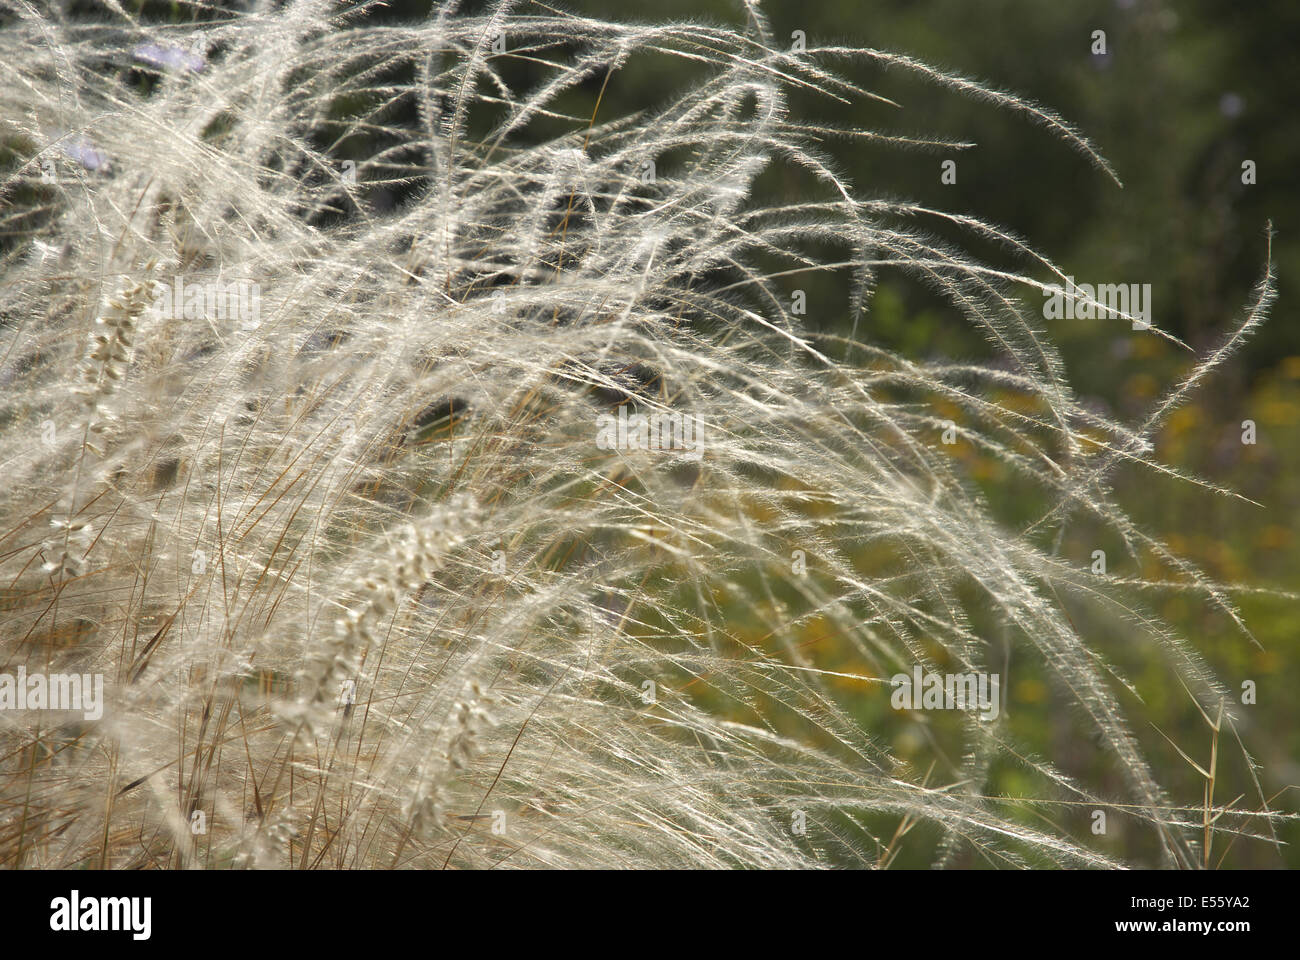 feather grass, stipa pennata Stock Photo